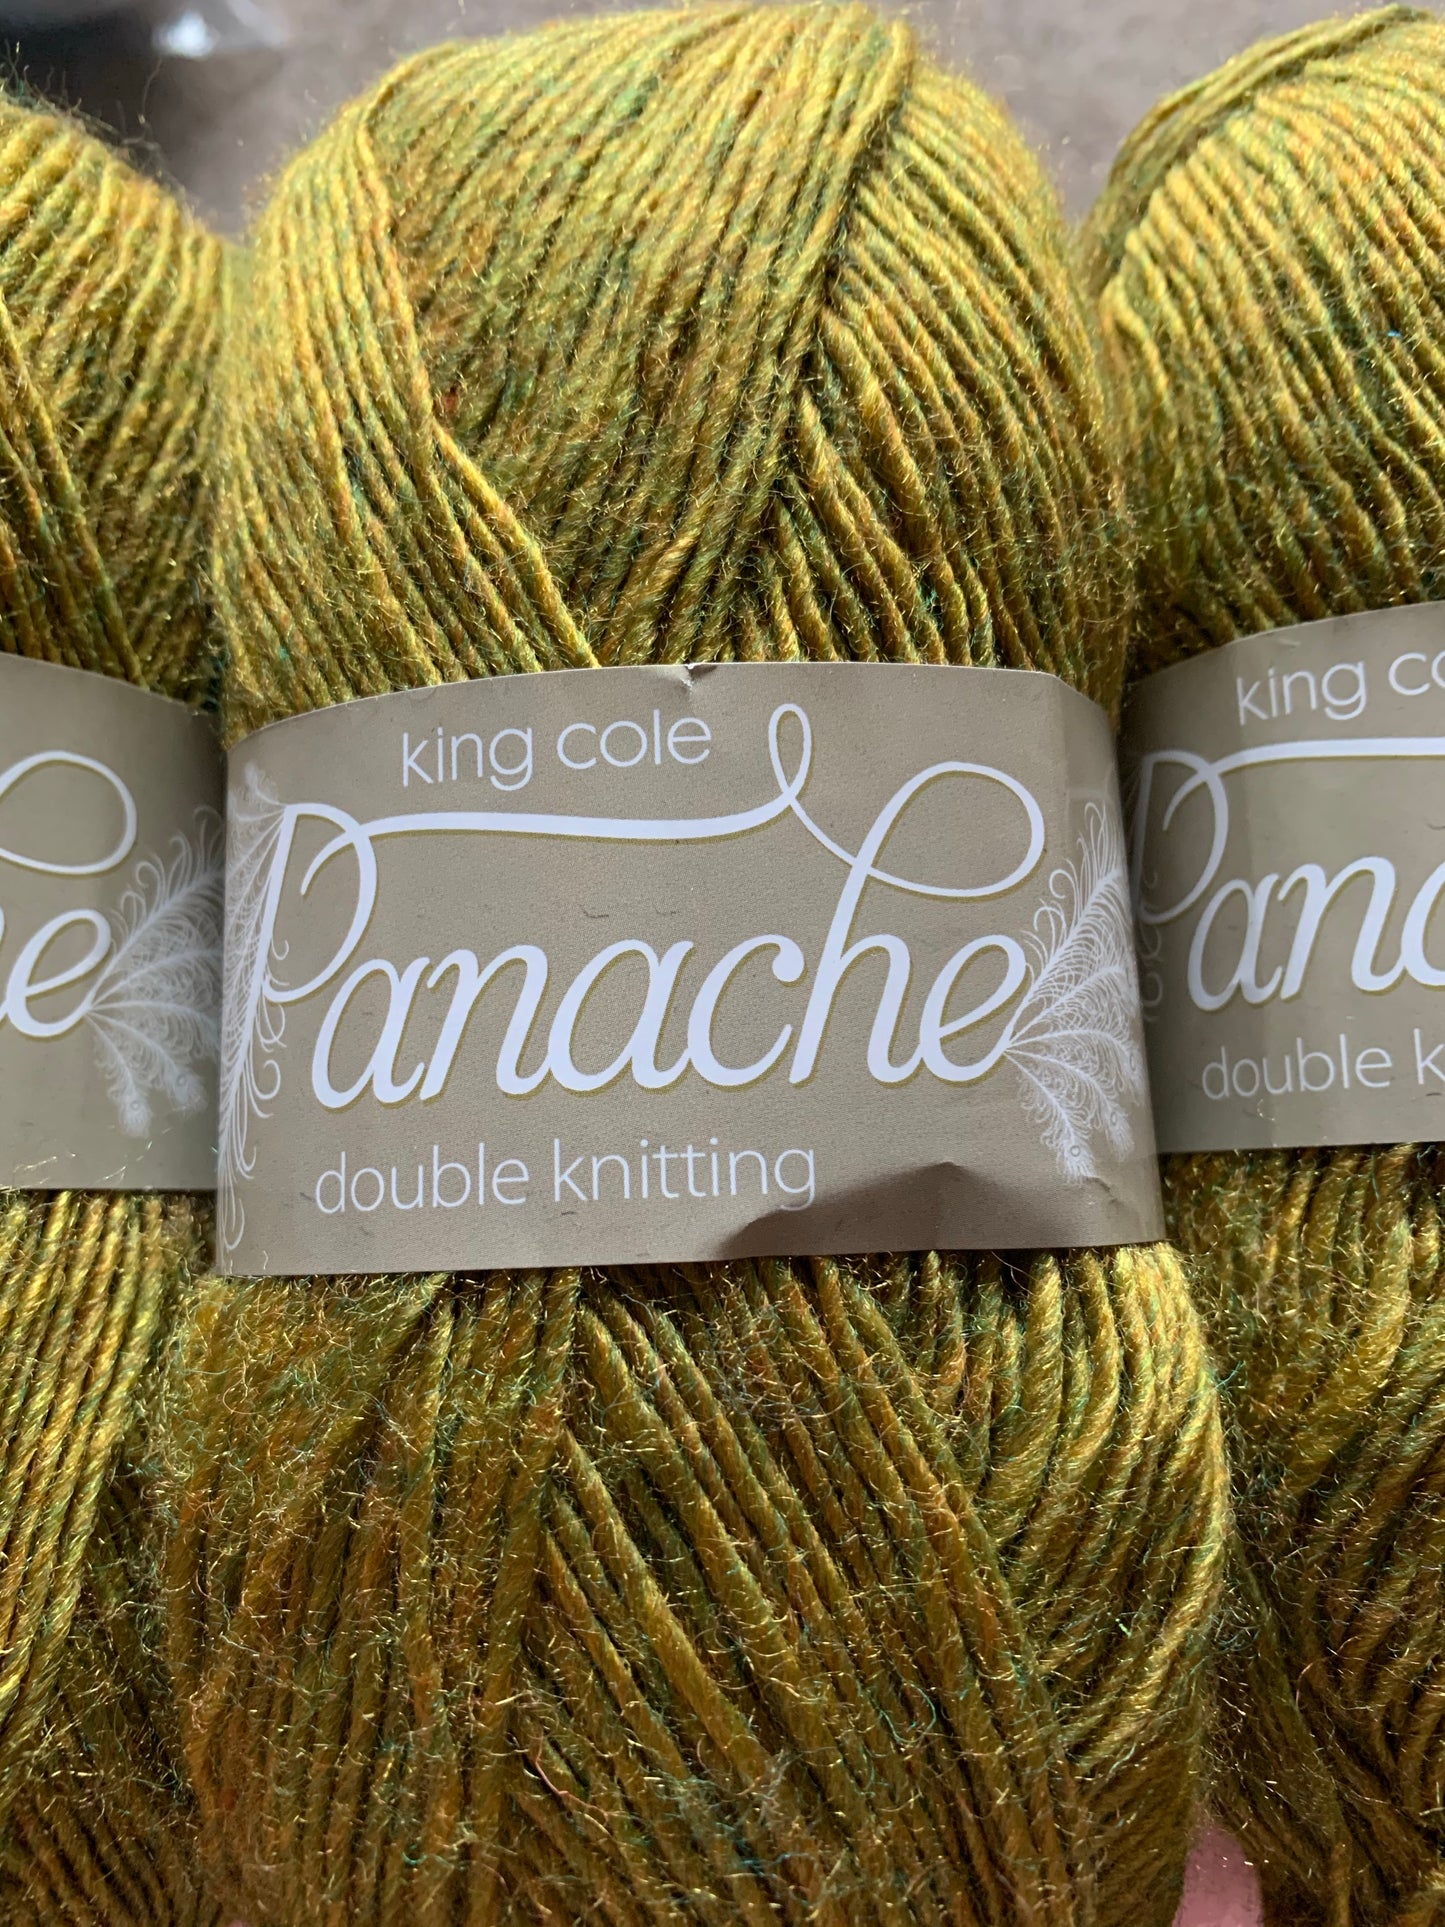 King Cole Panache Double Knitting